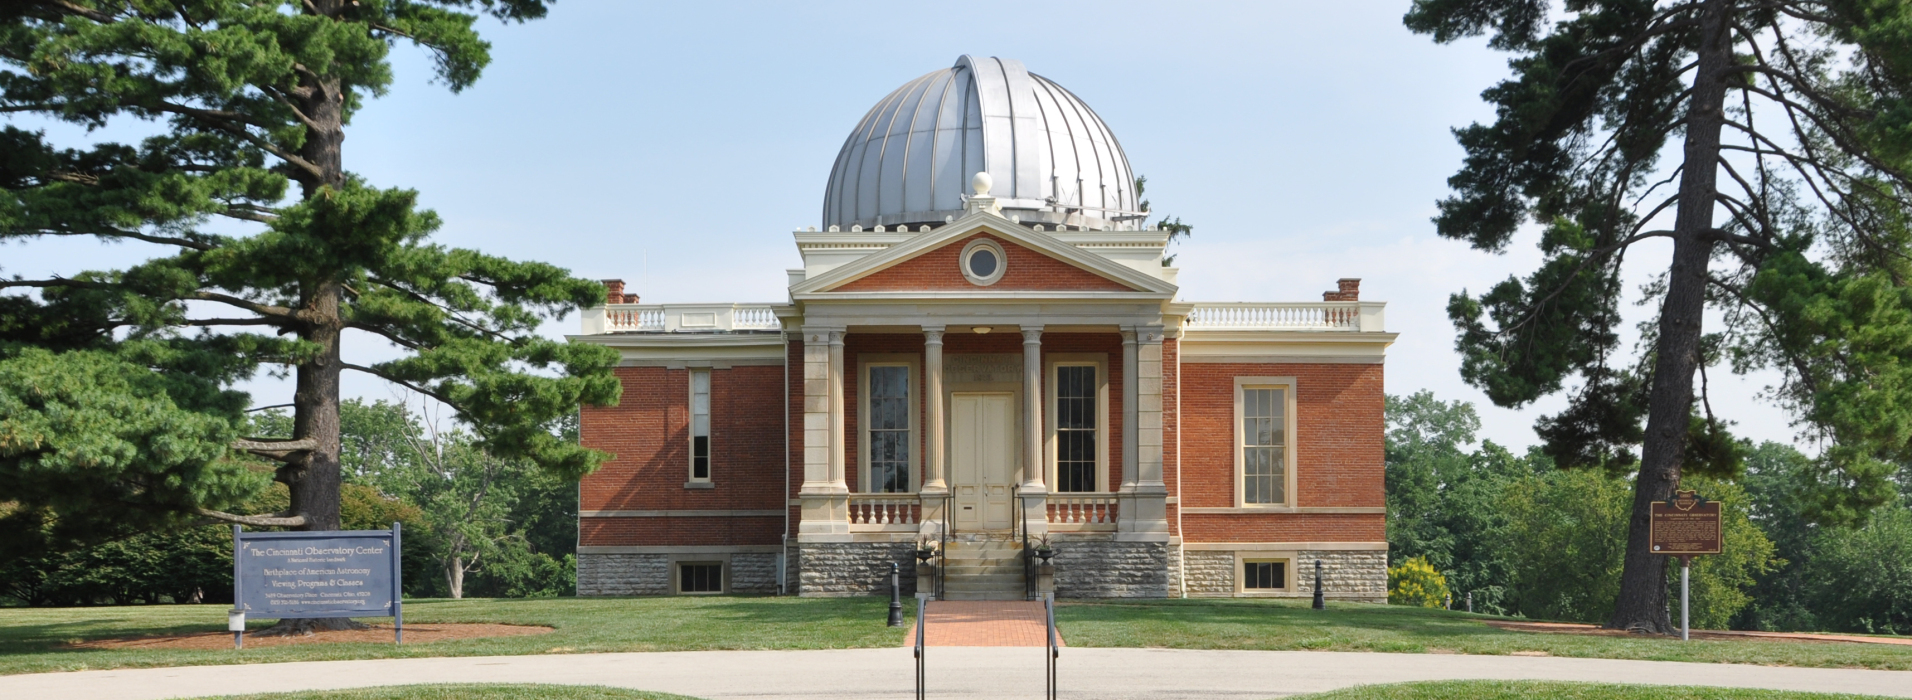 Cincinnati Observatory built in 1873